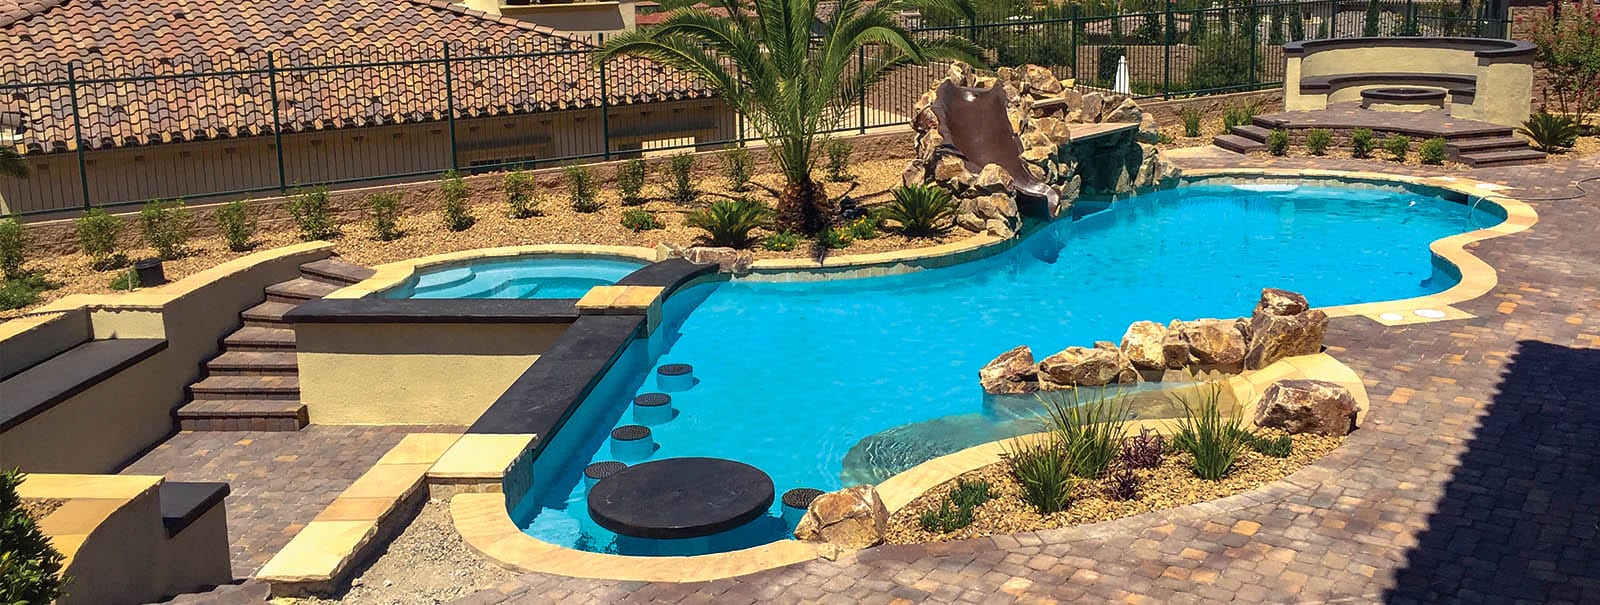 Las Vegas Custom Swimming Pool Builders Blue Haven Pools